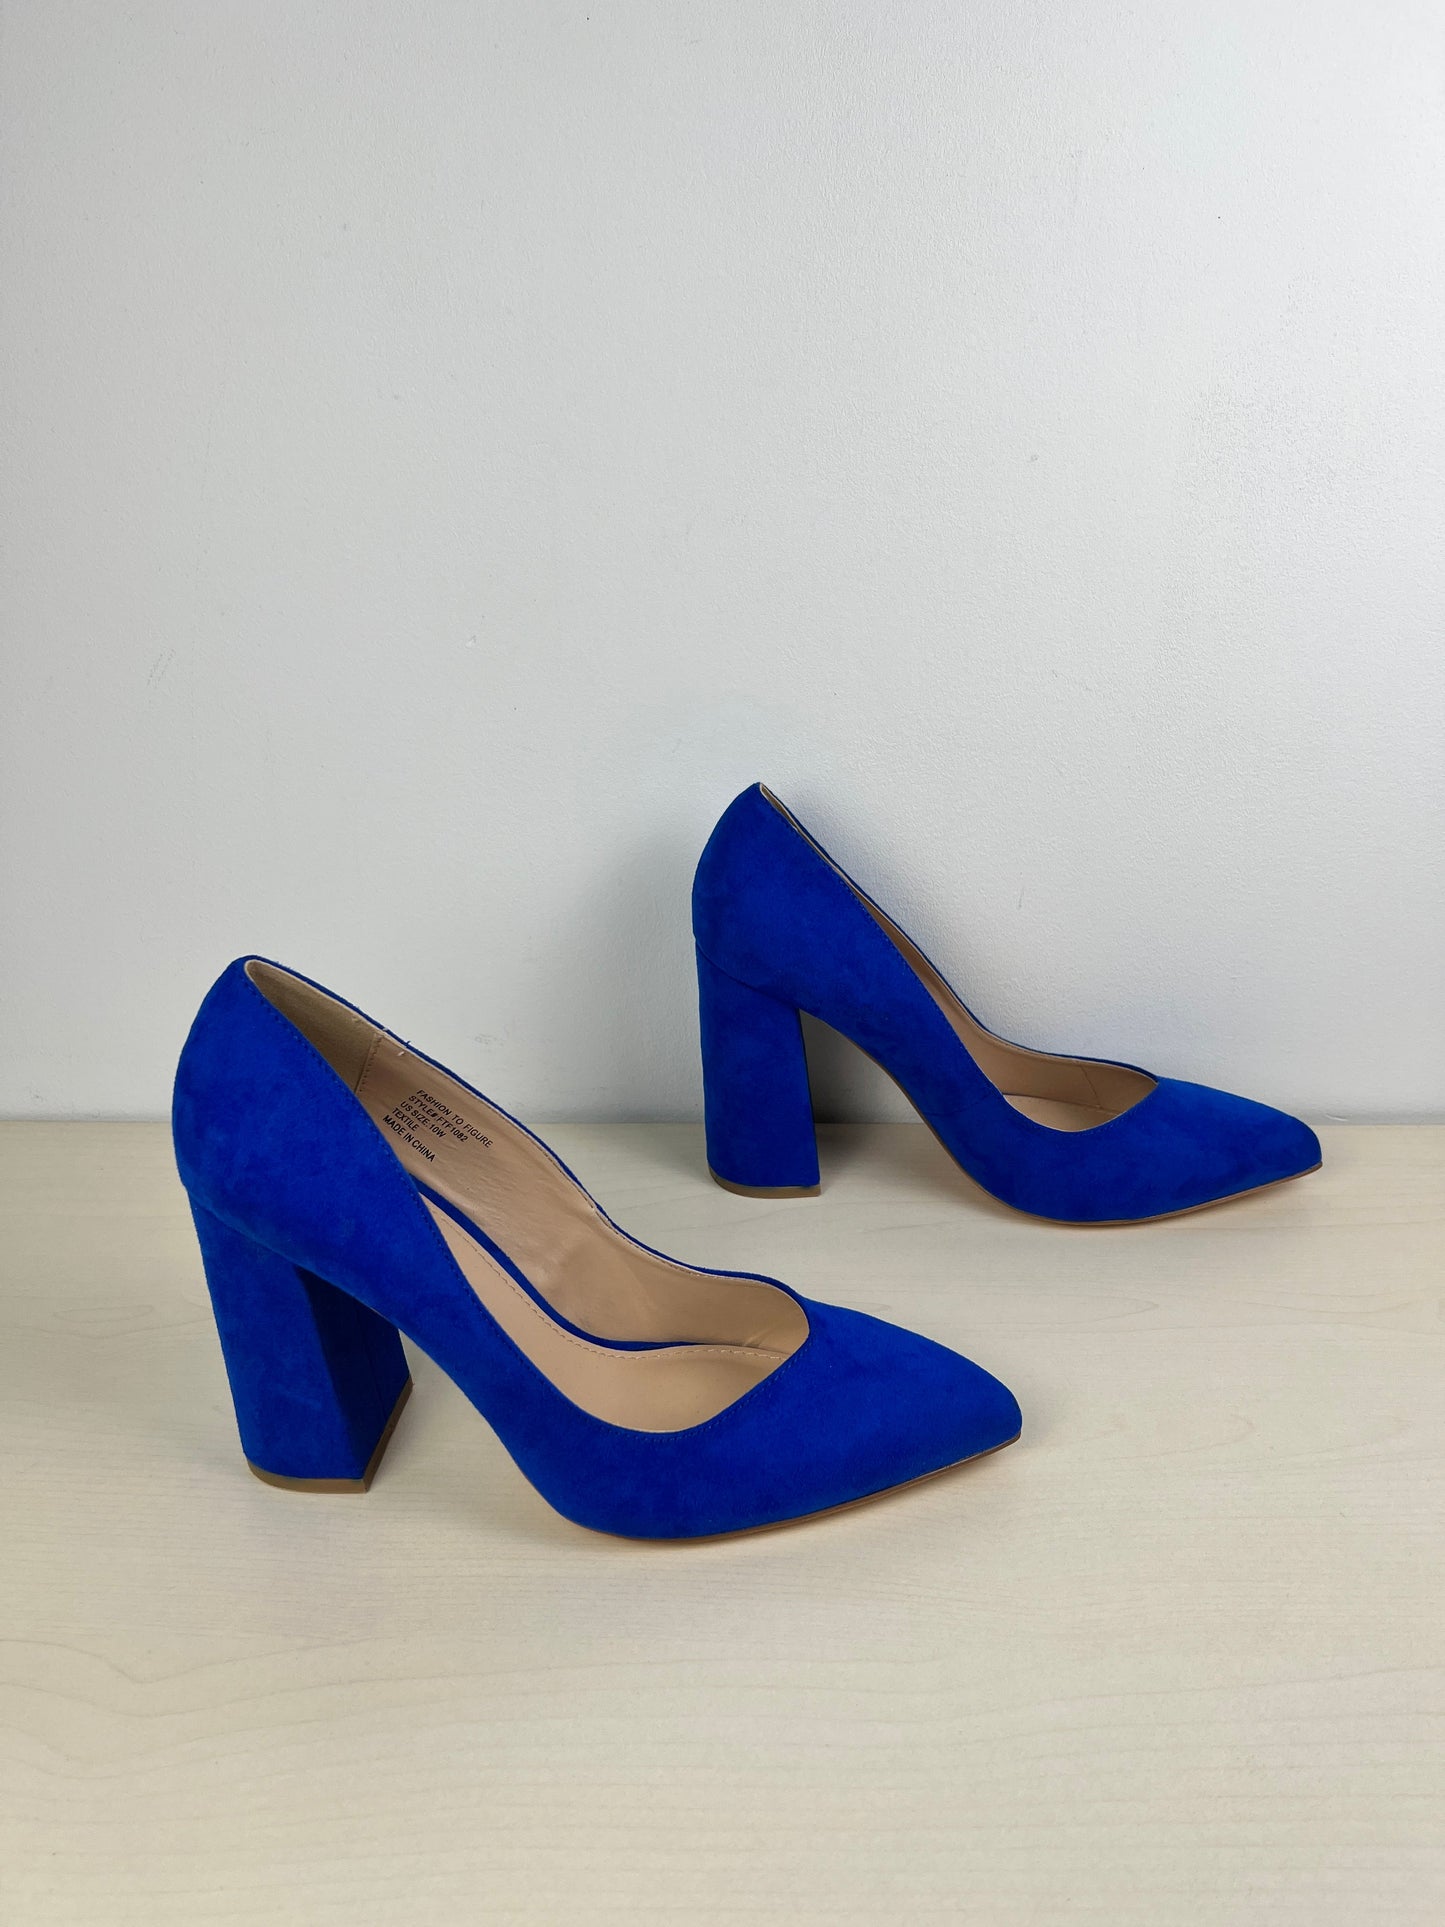 Blue Shoes Heels Block Fashion To Figure, Size 10